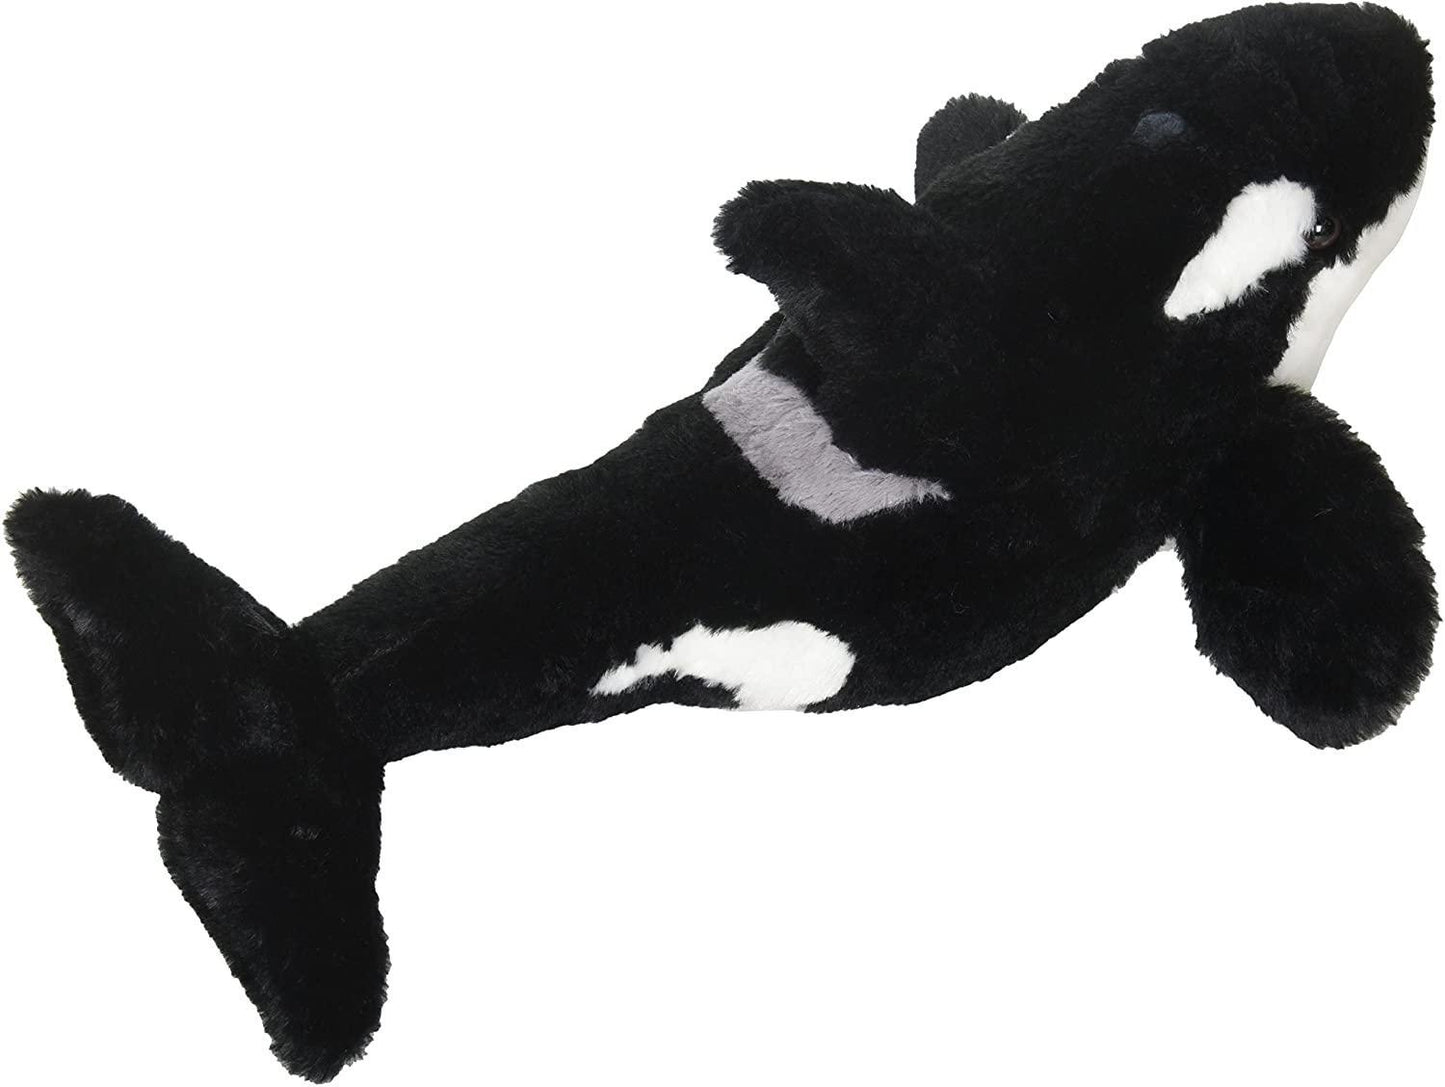 Wild Republic Orca Plush, Stuffed Animal, Plush Toy, Gifts for Kids, Cuddlekins 13 inches